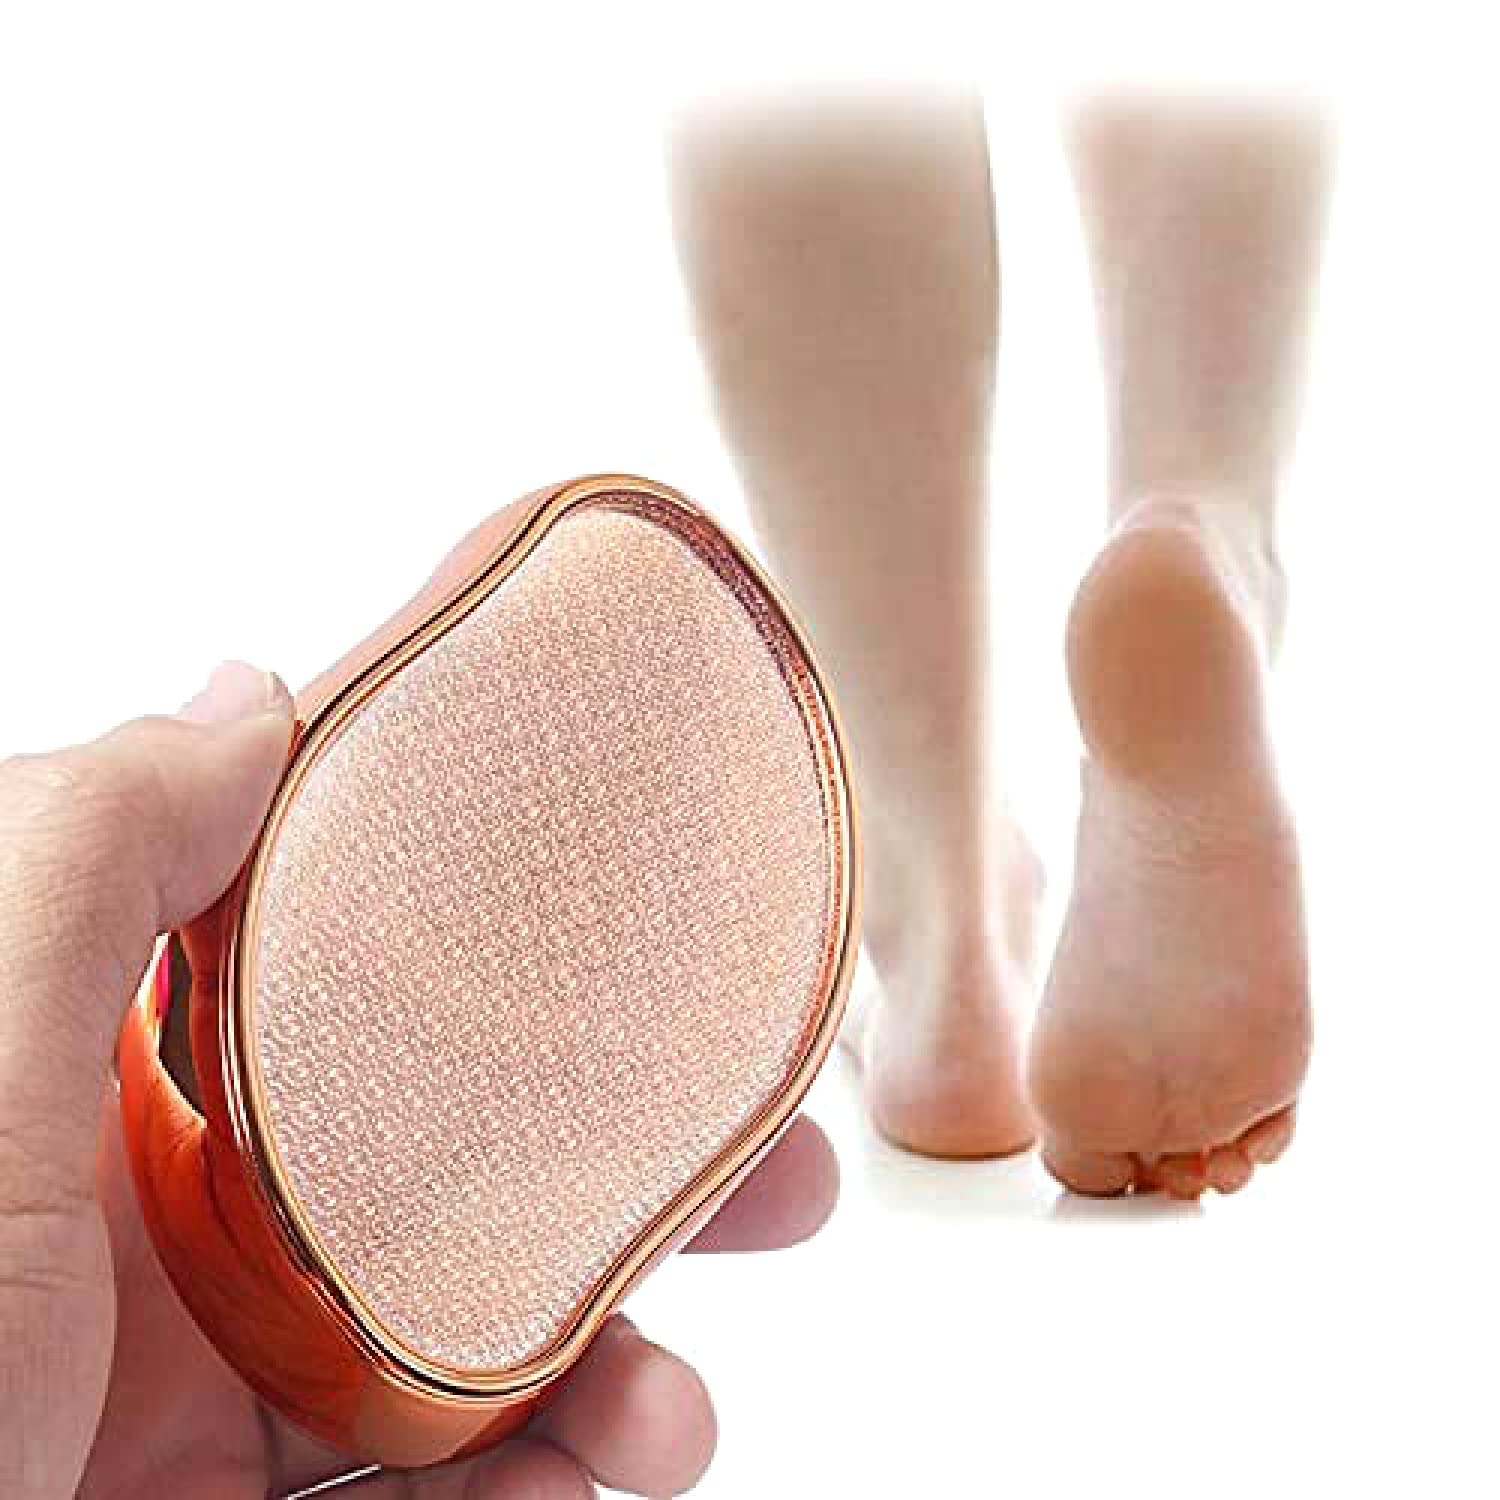 VANWIN Glass Foot File, Callus Remover for Feet Foot Scrubber Dead Skin  Remover with Nano Micro-Abrasive Particles, Foot Rasp Heel Scraper Hard  Skin